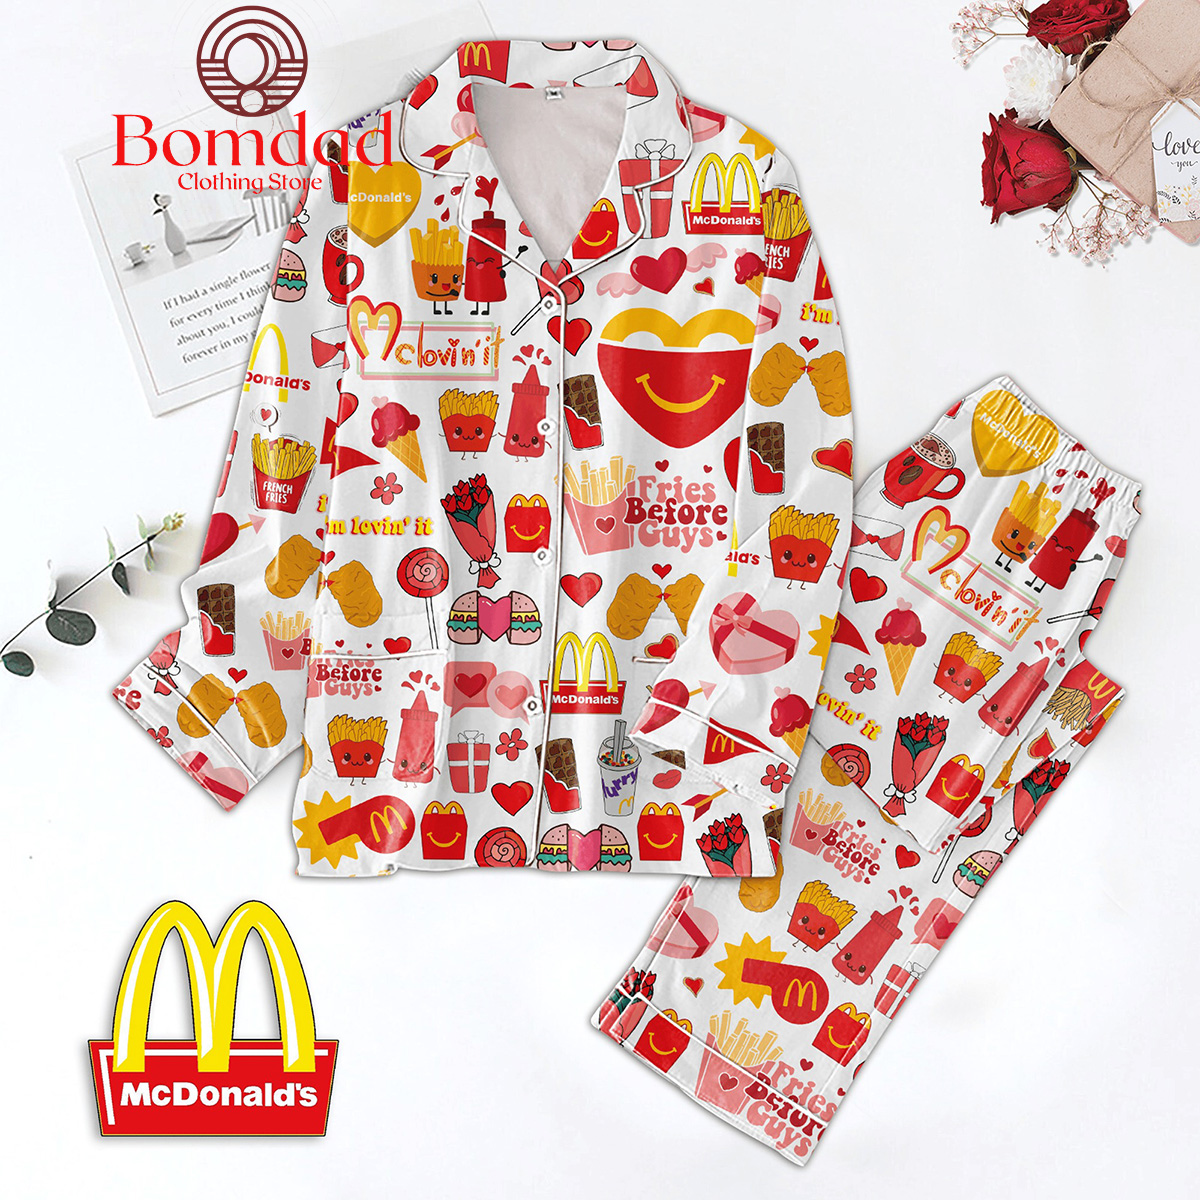 McDonalds's Fries Before Guys Pajamas Set - Bomdads